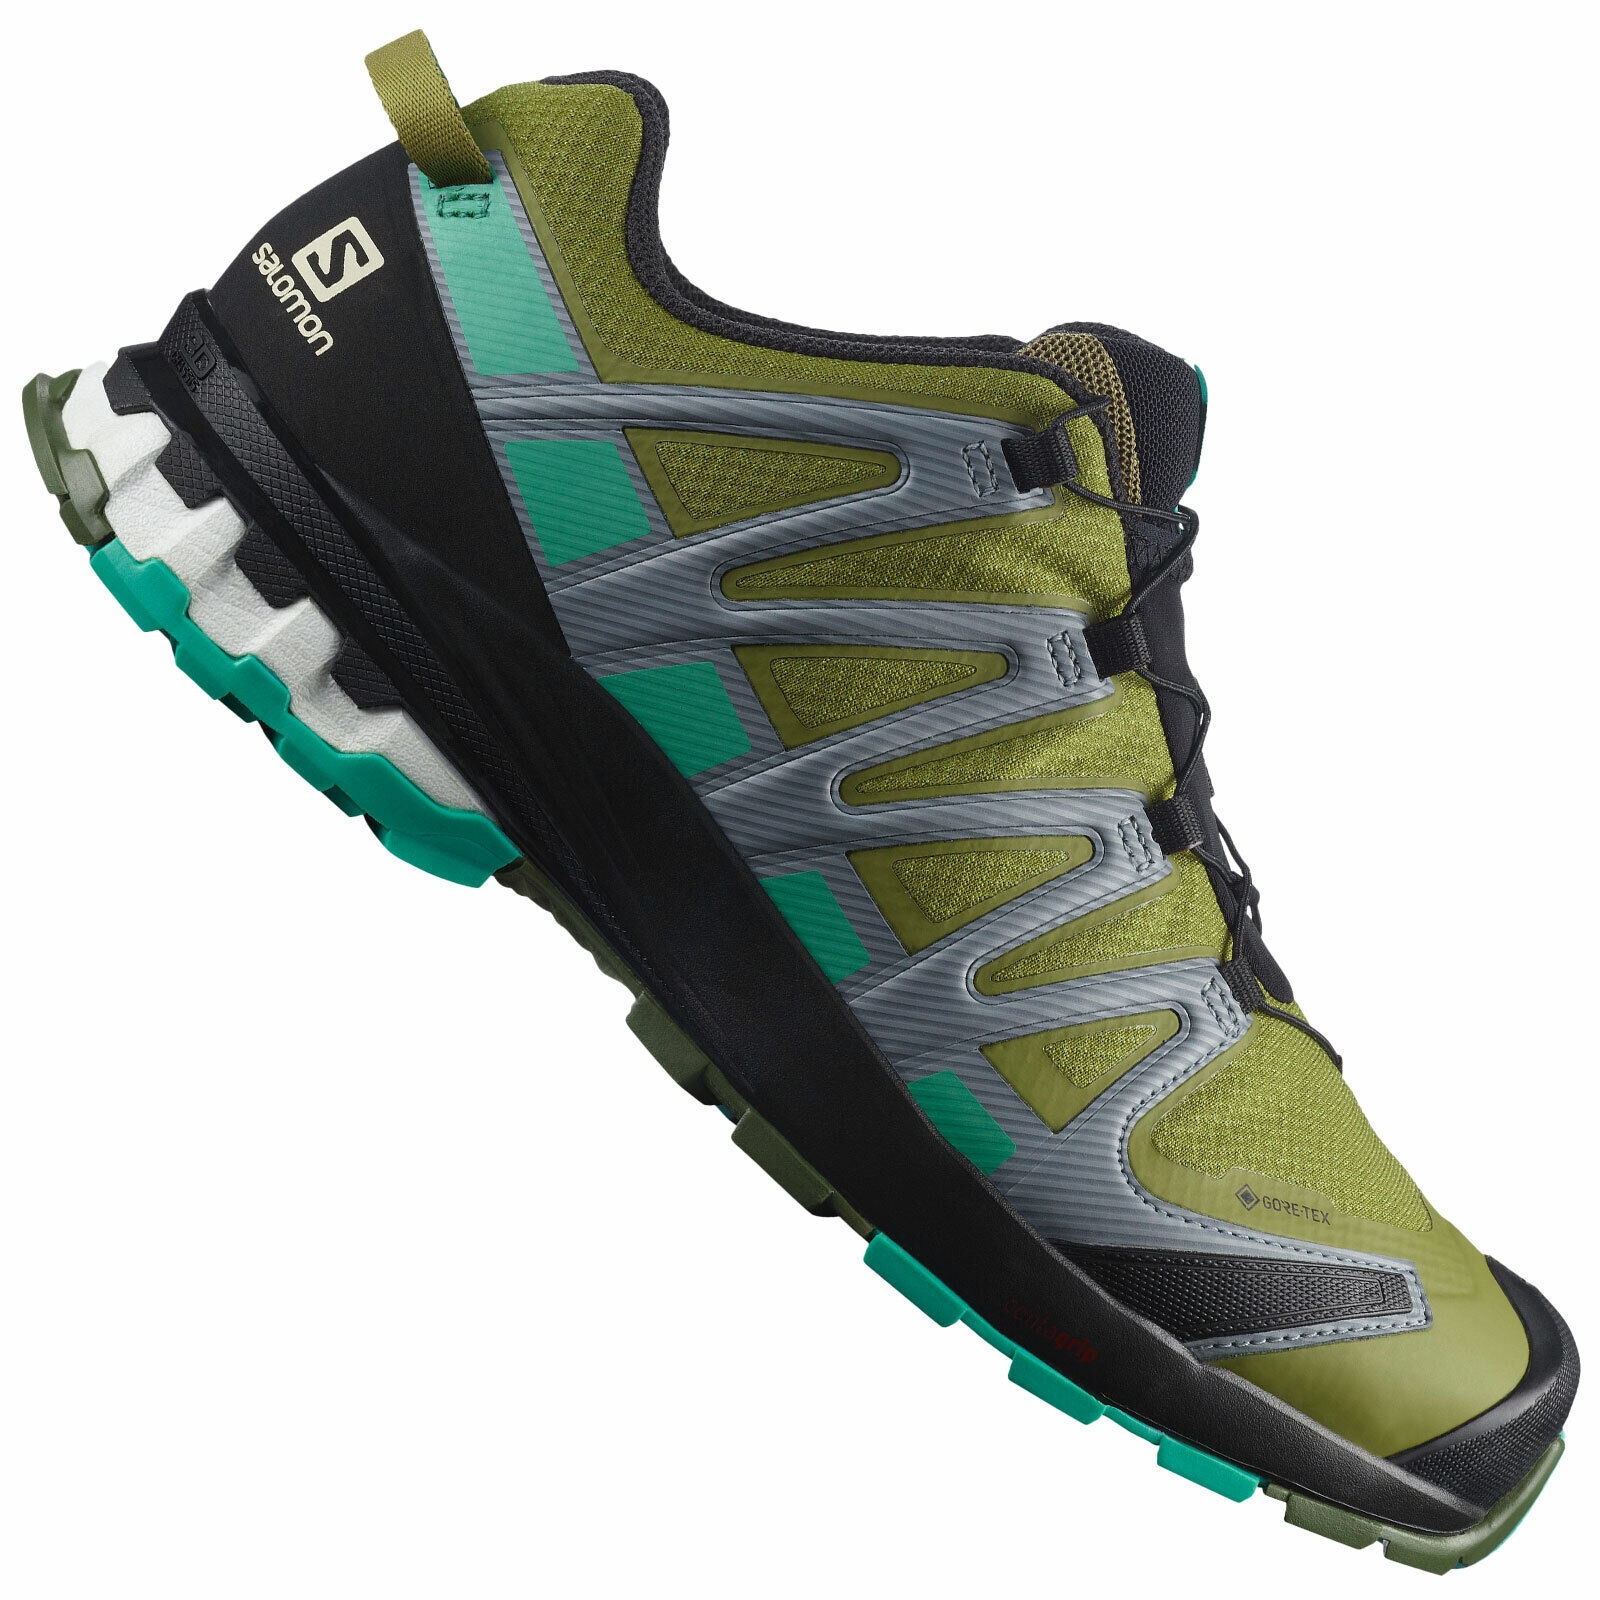 Salomon Xa Pro GTX Men's Running Shoes Hill Running Shoes Green | eBay